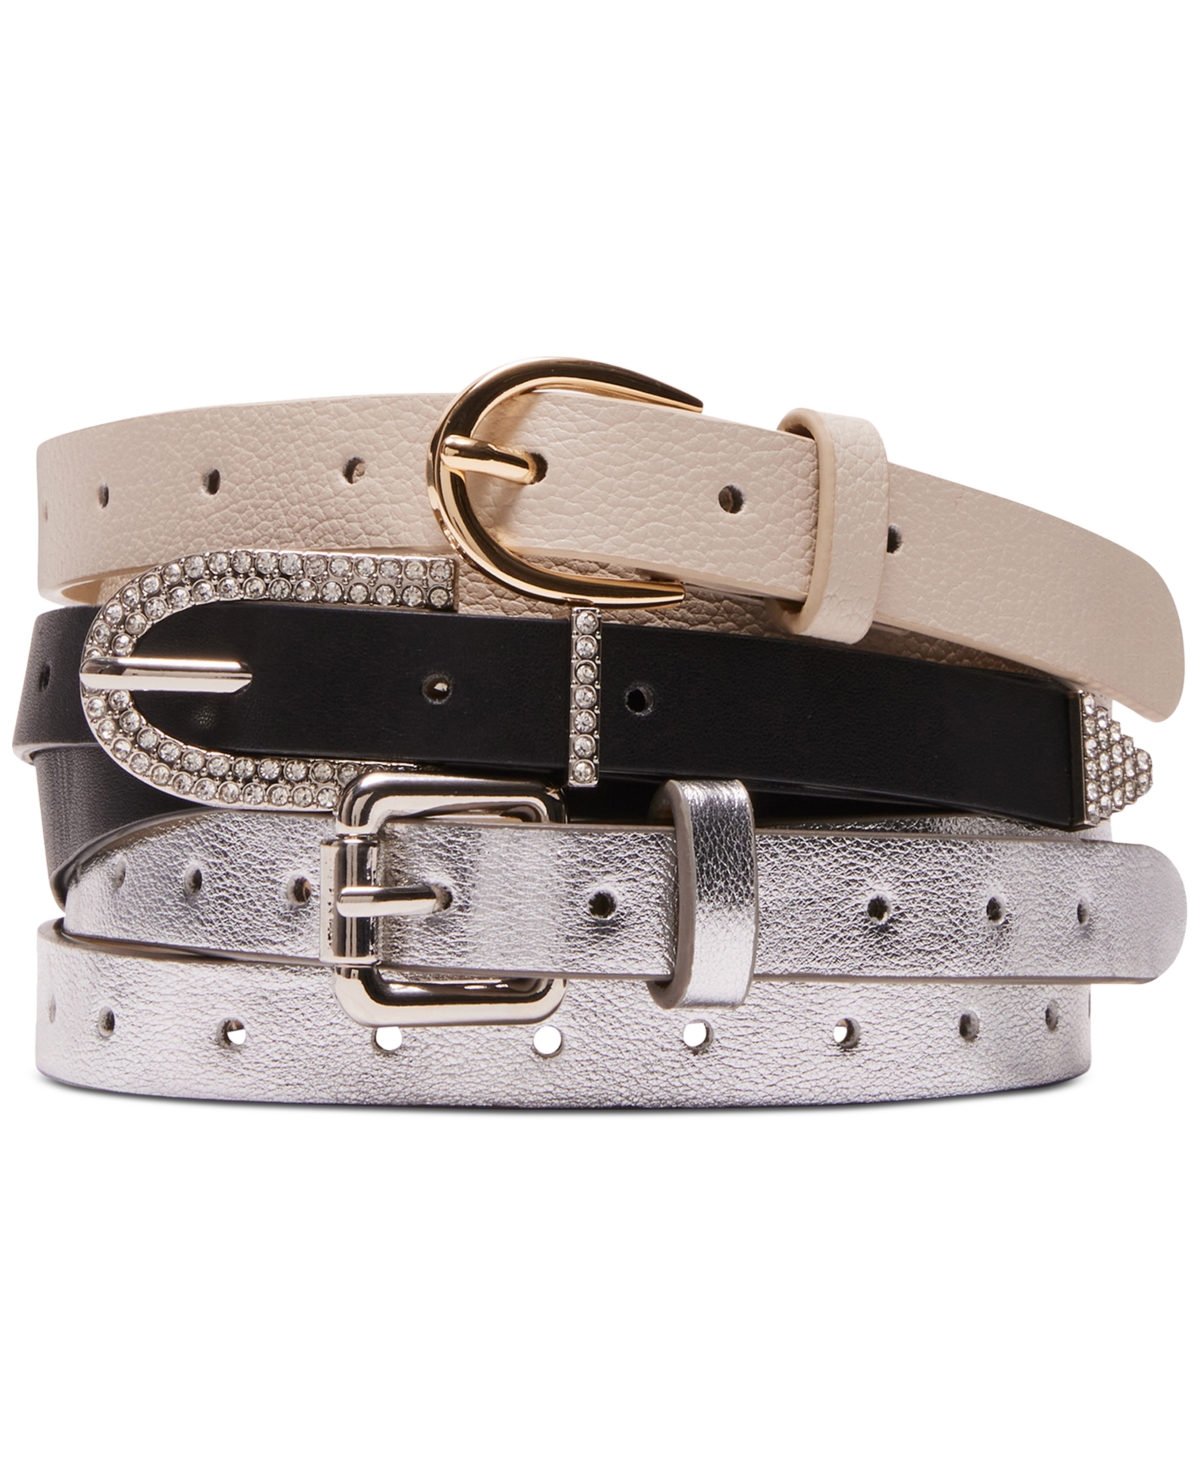 Women's 3-Pc. Embellished Faux-Leather Belt Set - Silver/black/cream